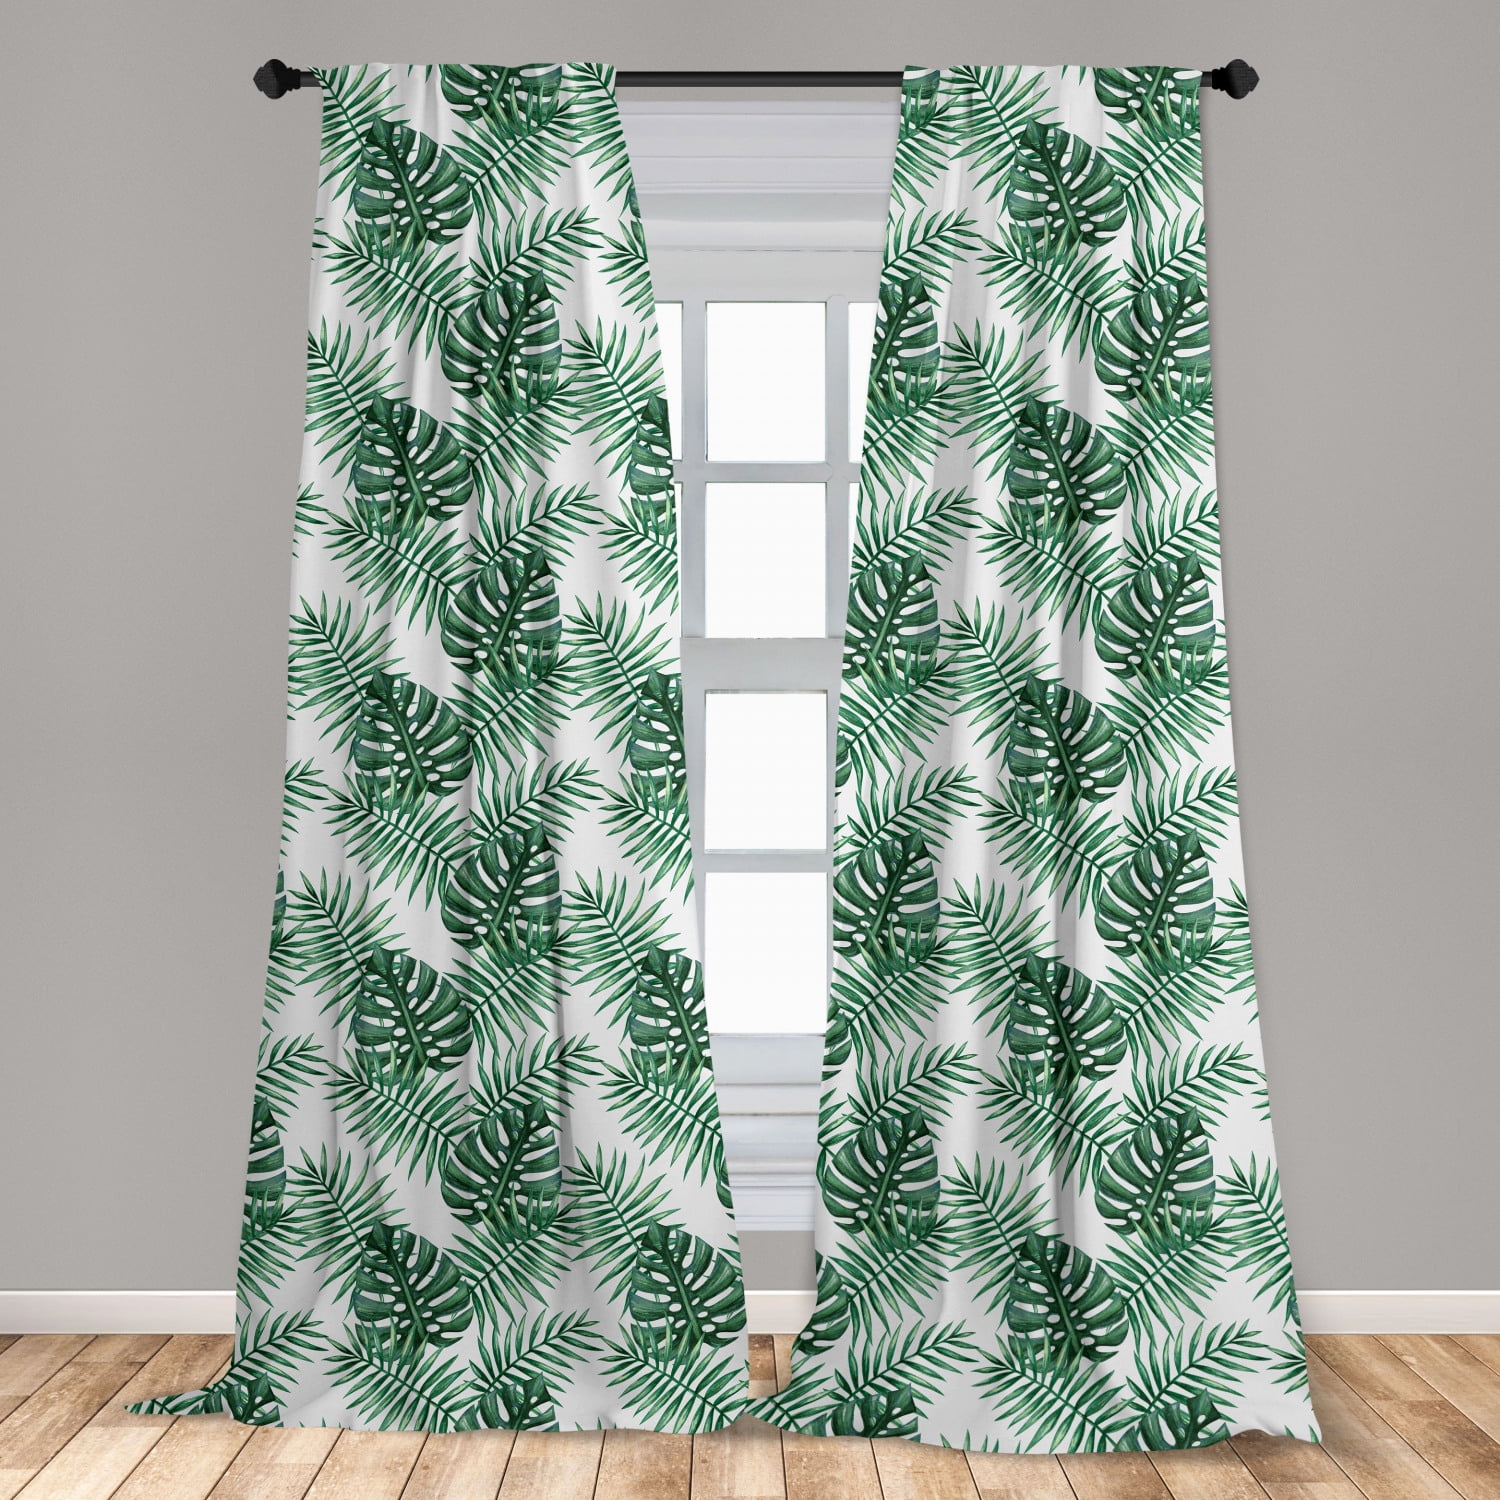 Tropical jungle plant leaves Window Drapes Short Kitchen Curtain 2 Panel 55"X39"